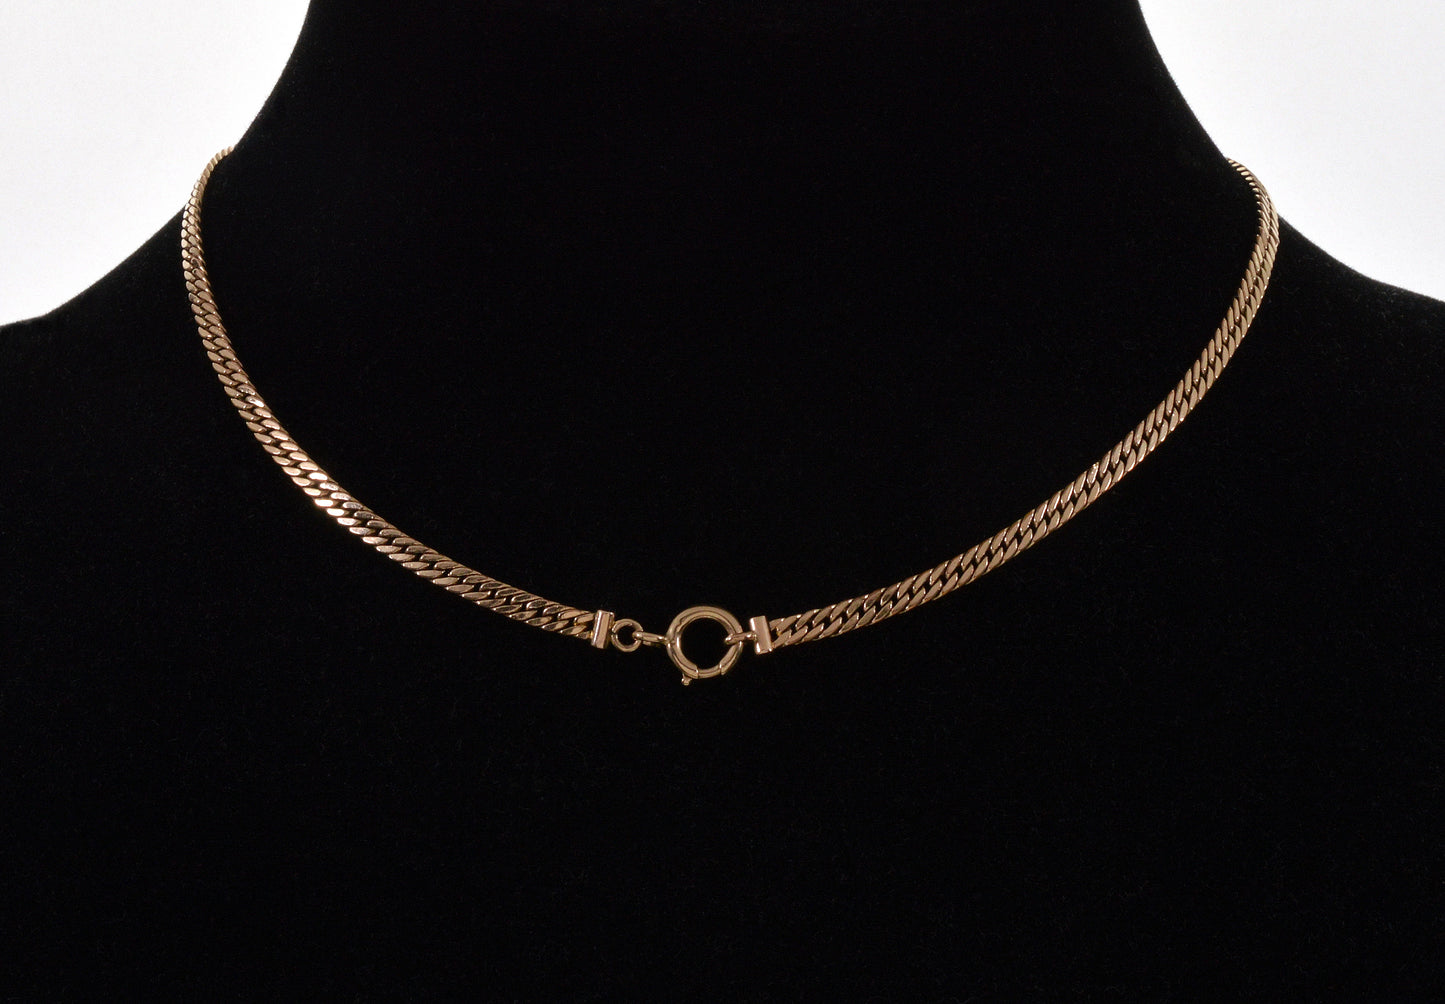 Antique Victorian 10K Gold Double Link Chain Necklace C.1890